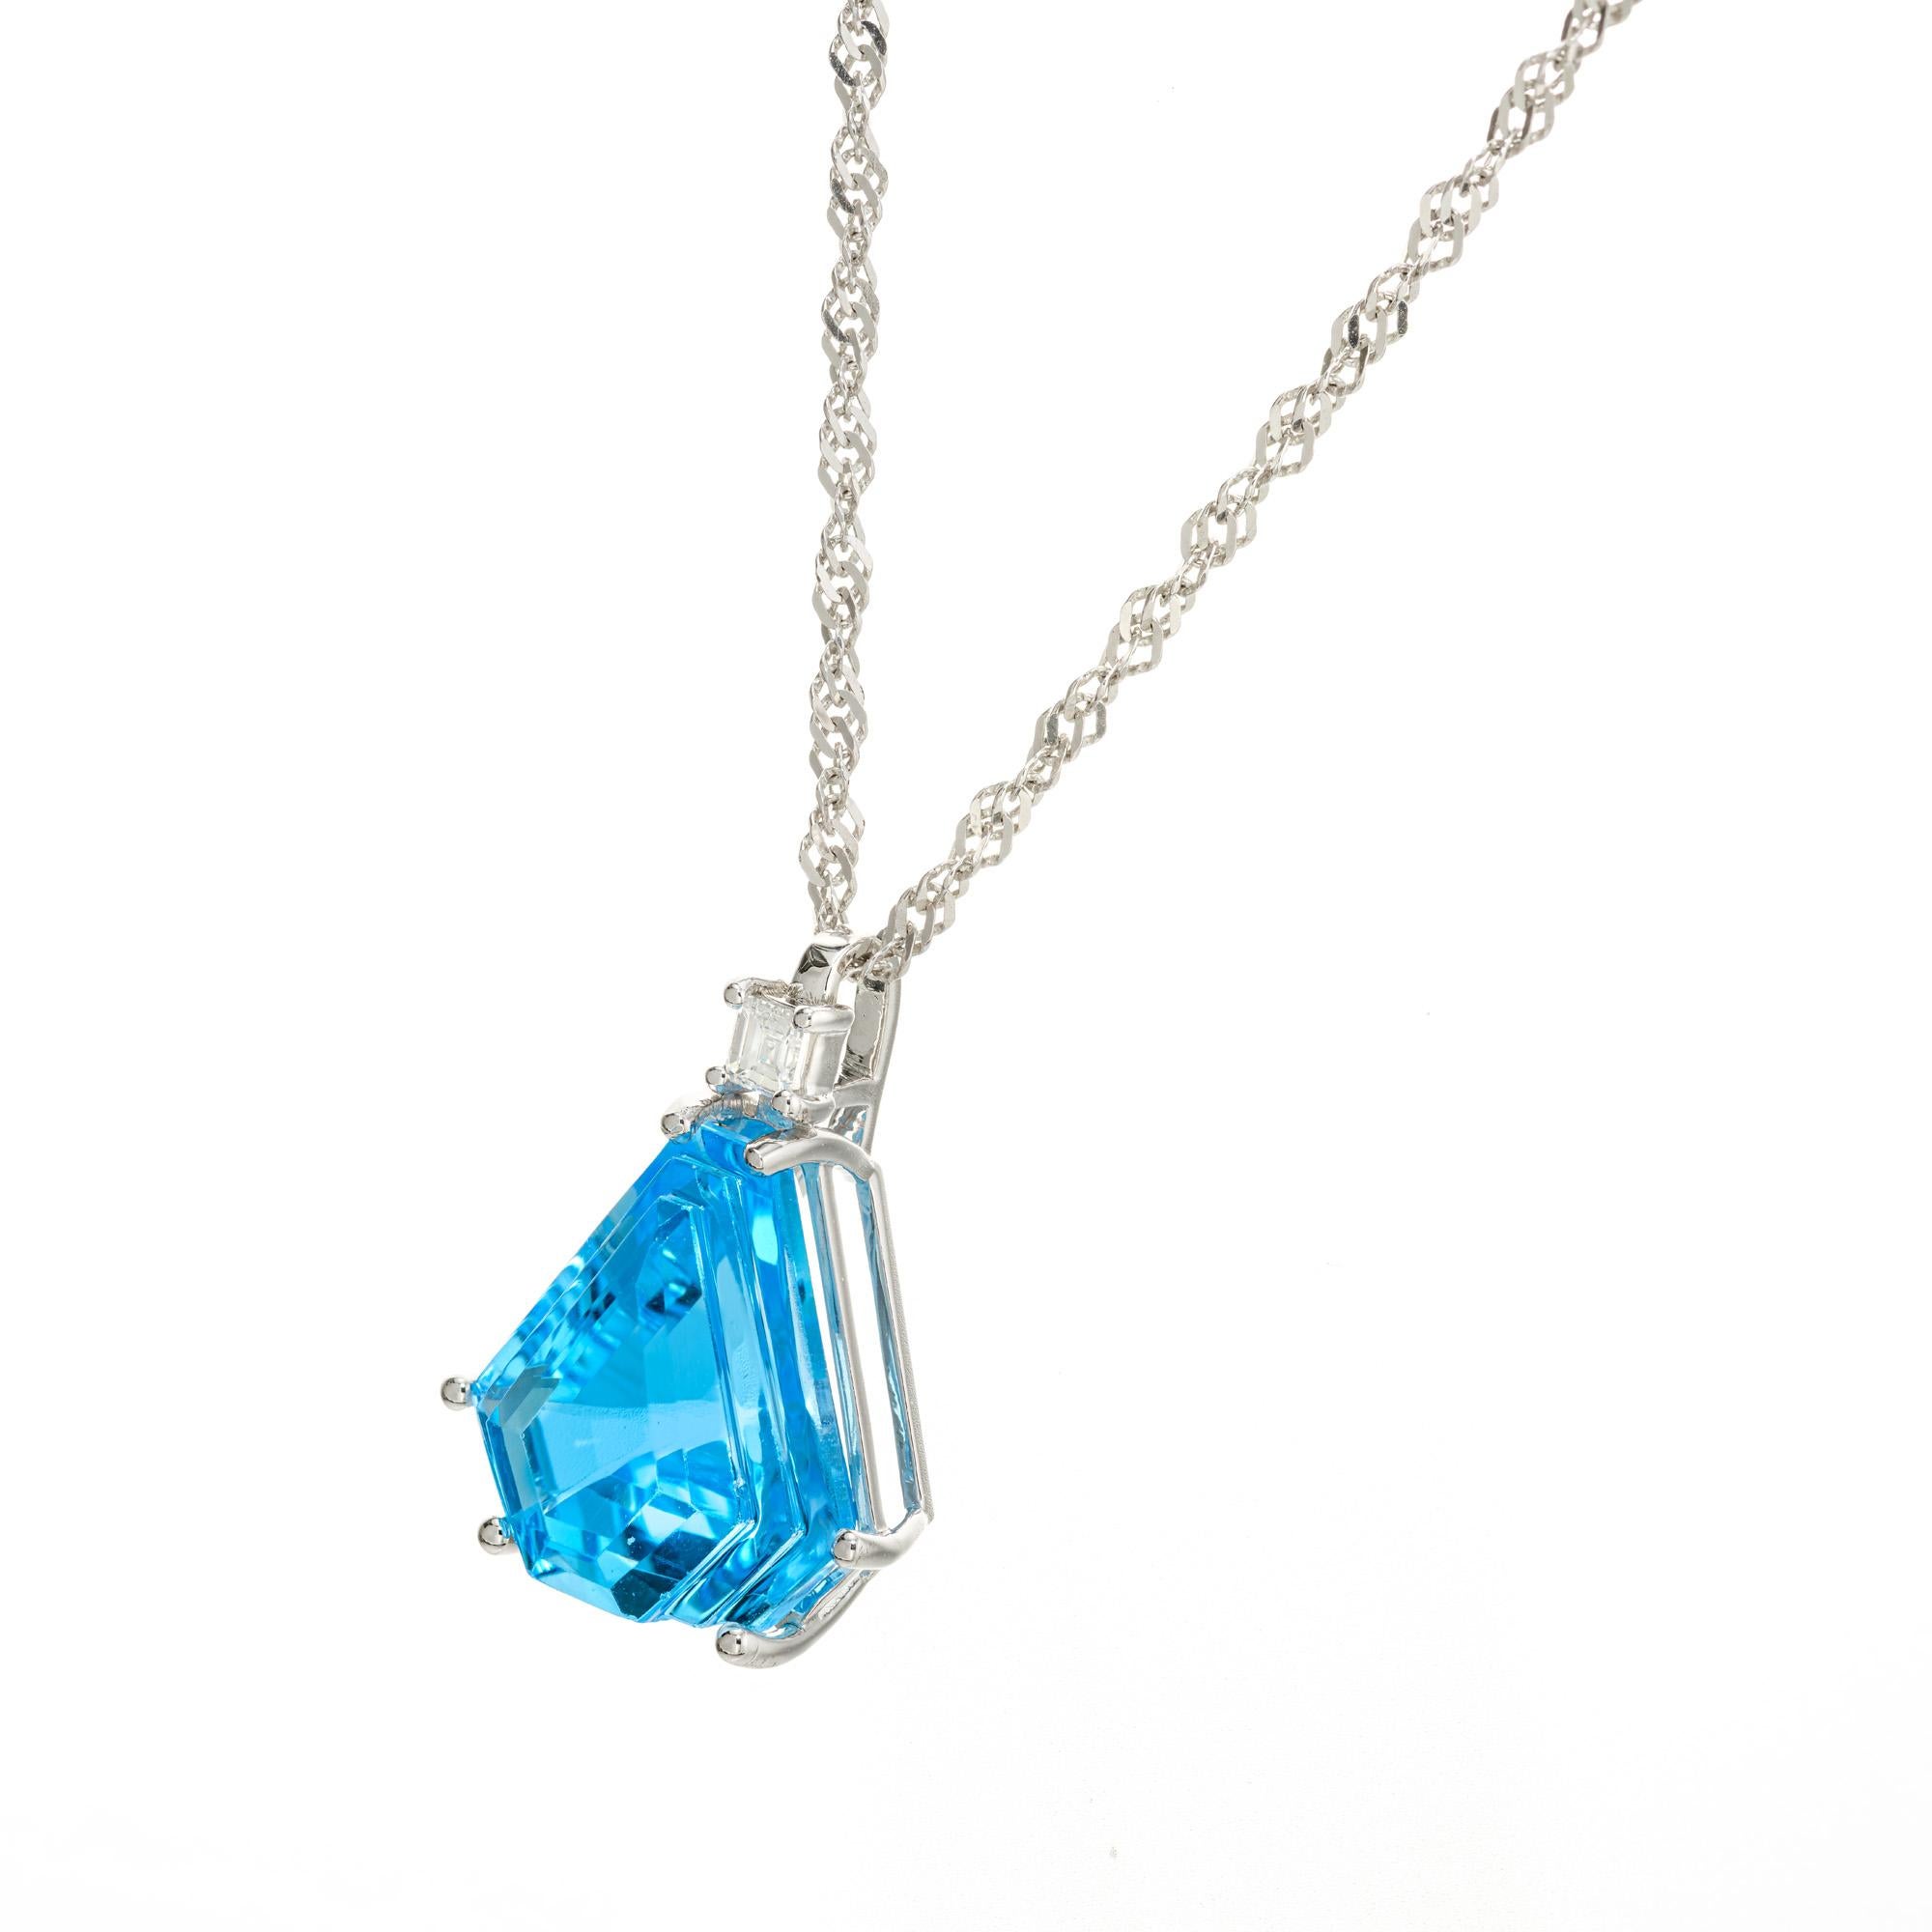 bvlgari blue fantasy necklace price